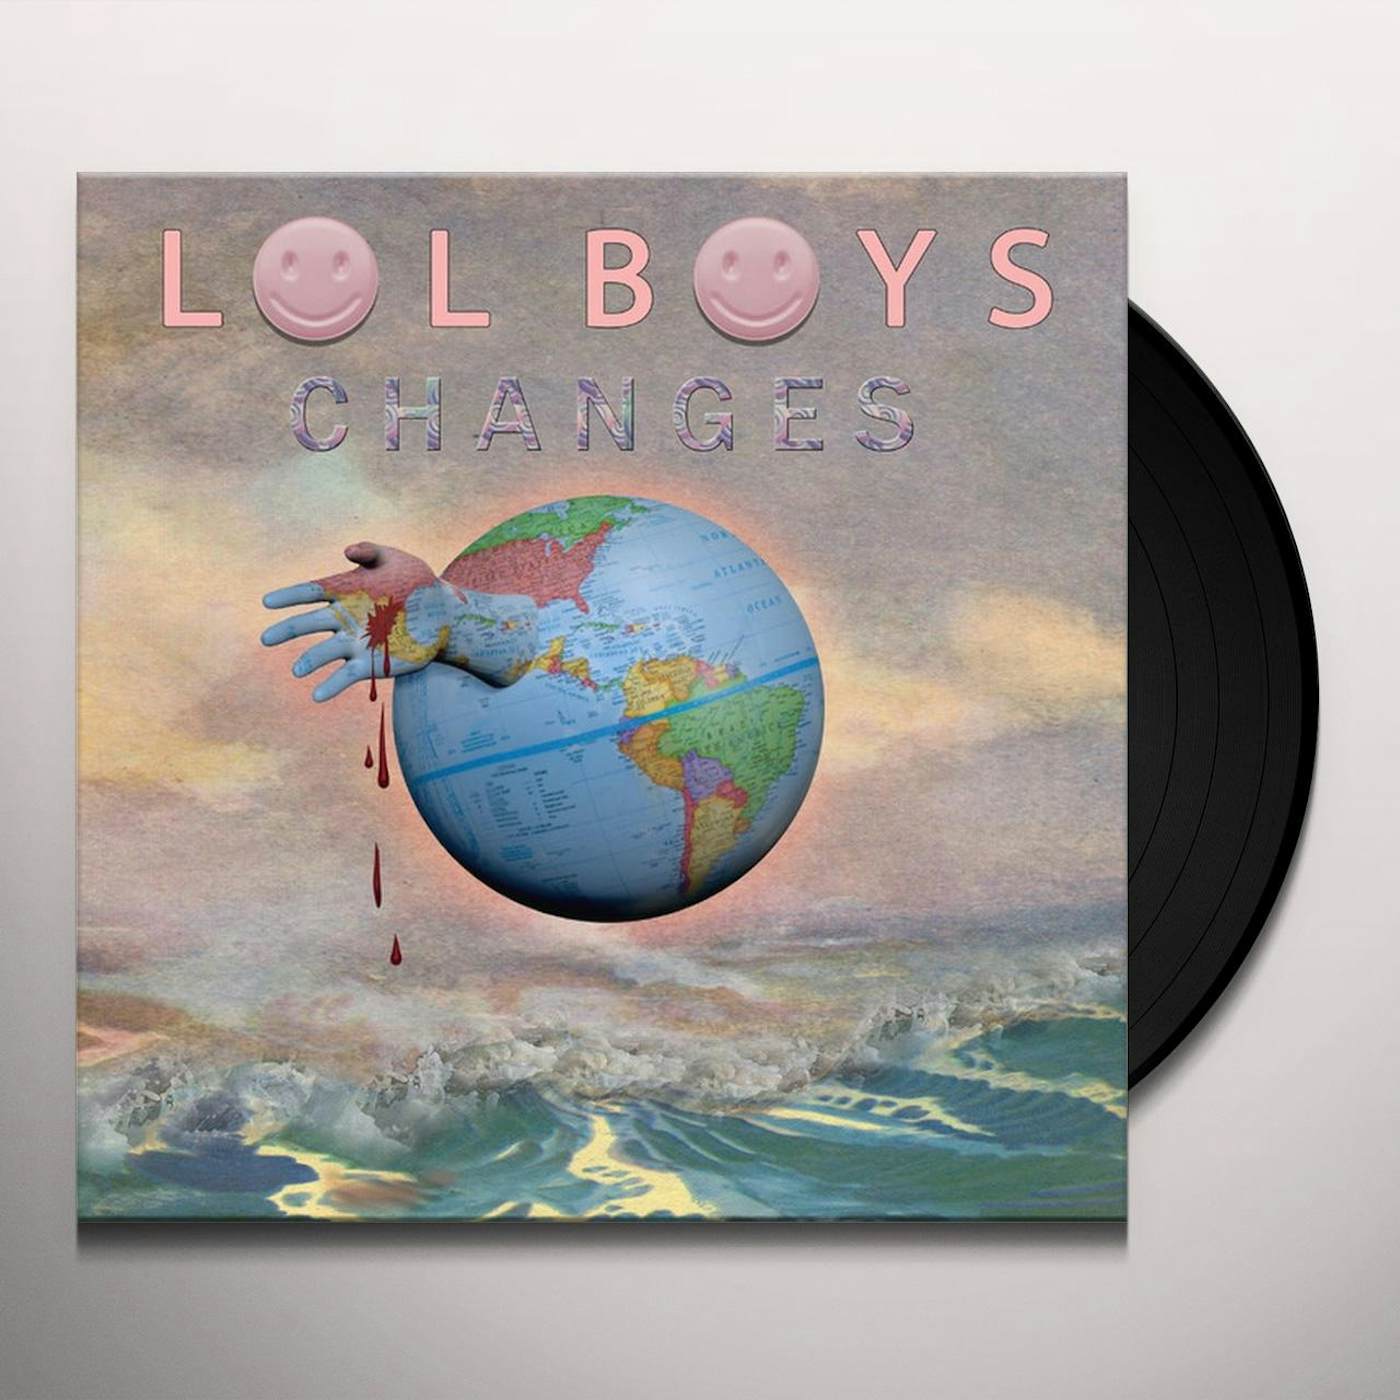 LOL Boys Changes Vinyl Record